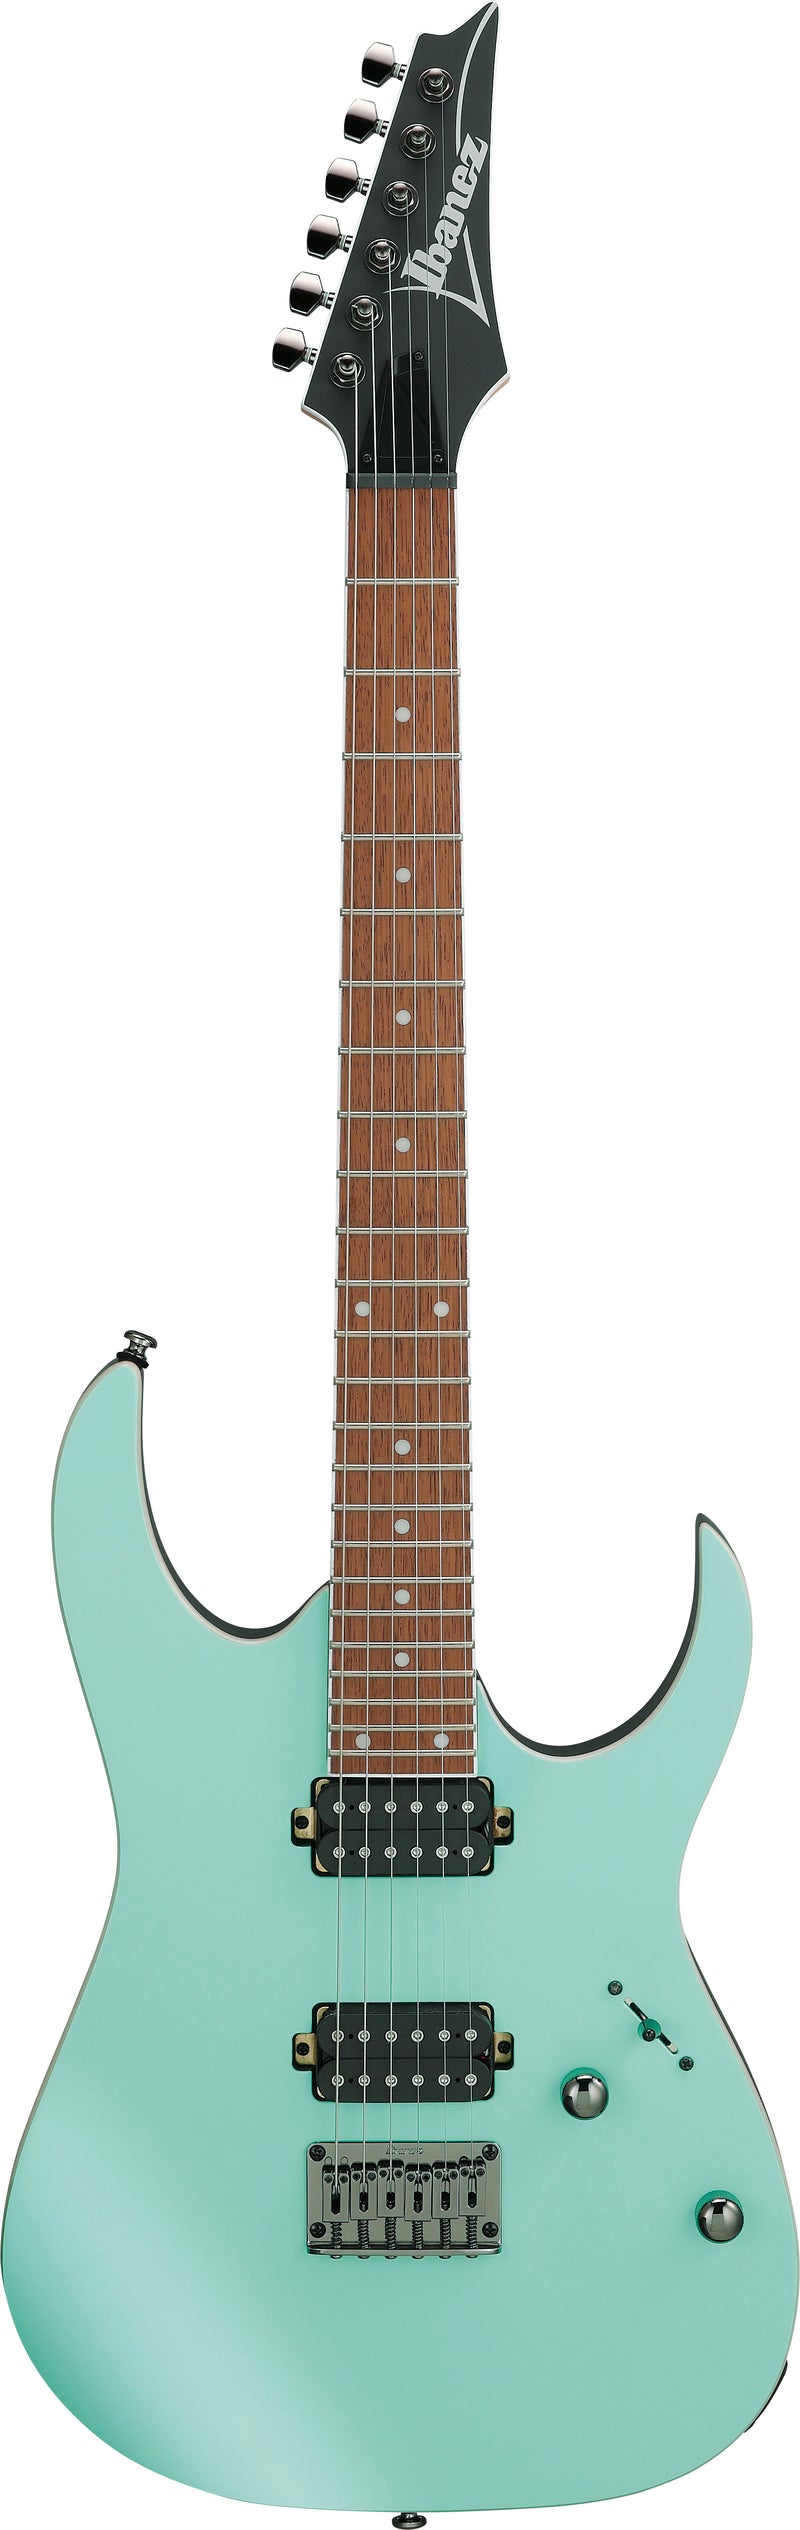 Ibanez RG Standard Electric Guitar (Sea Shore Matte)